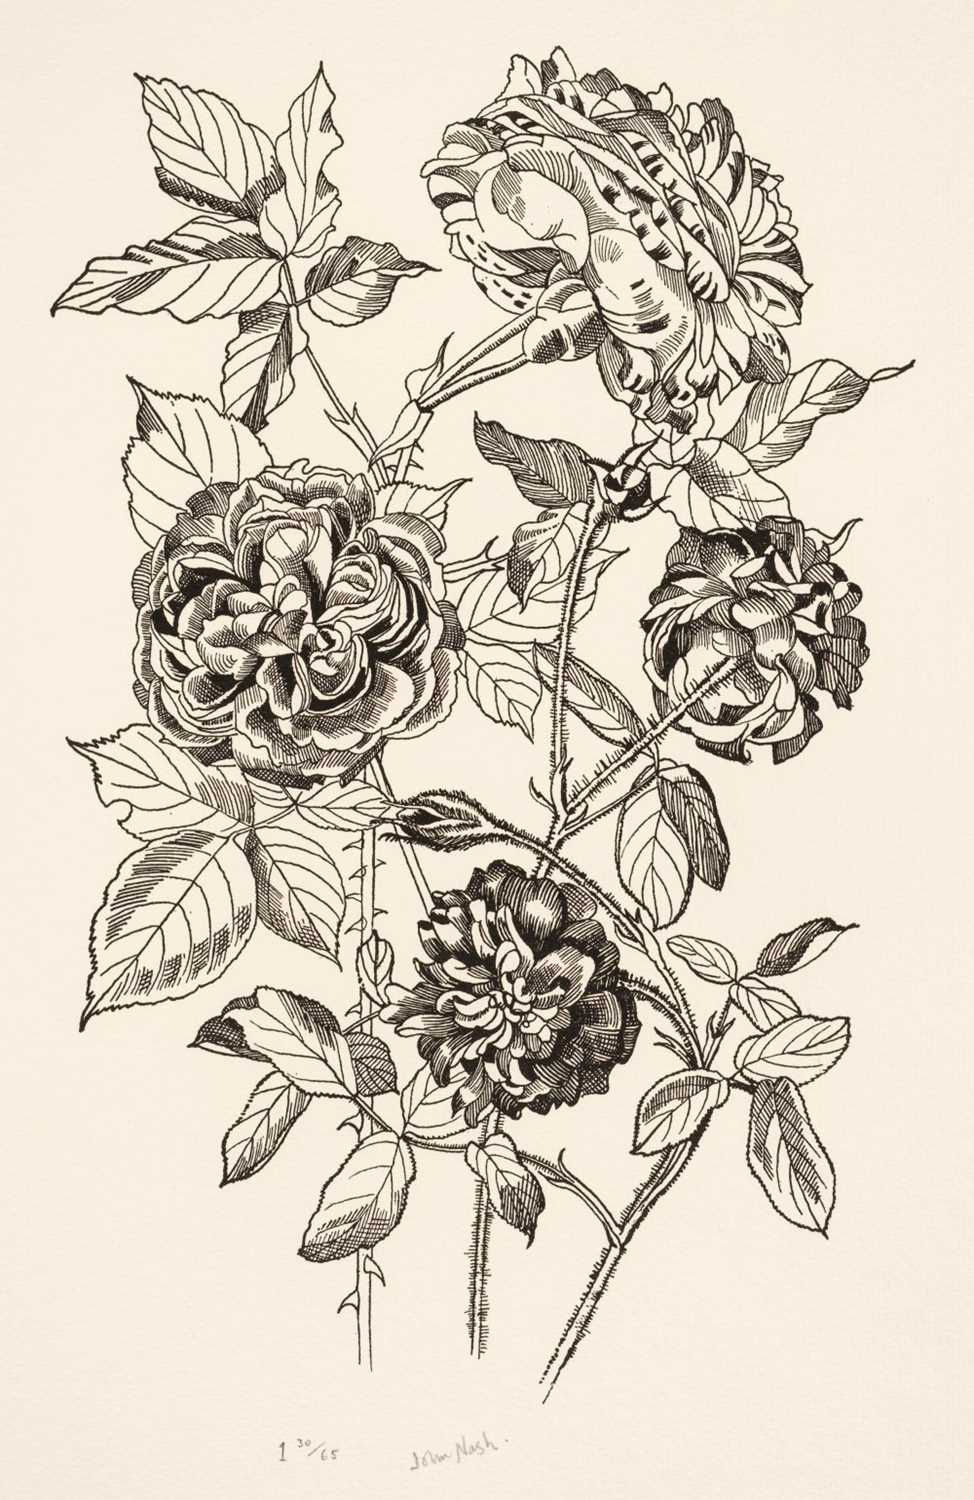 Lot 265 - Nash (John, 1893-1977). Flower Drawings, published by Warren Editions, 1969